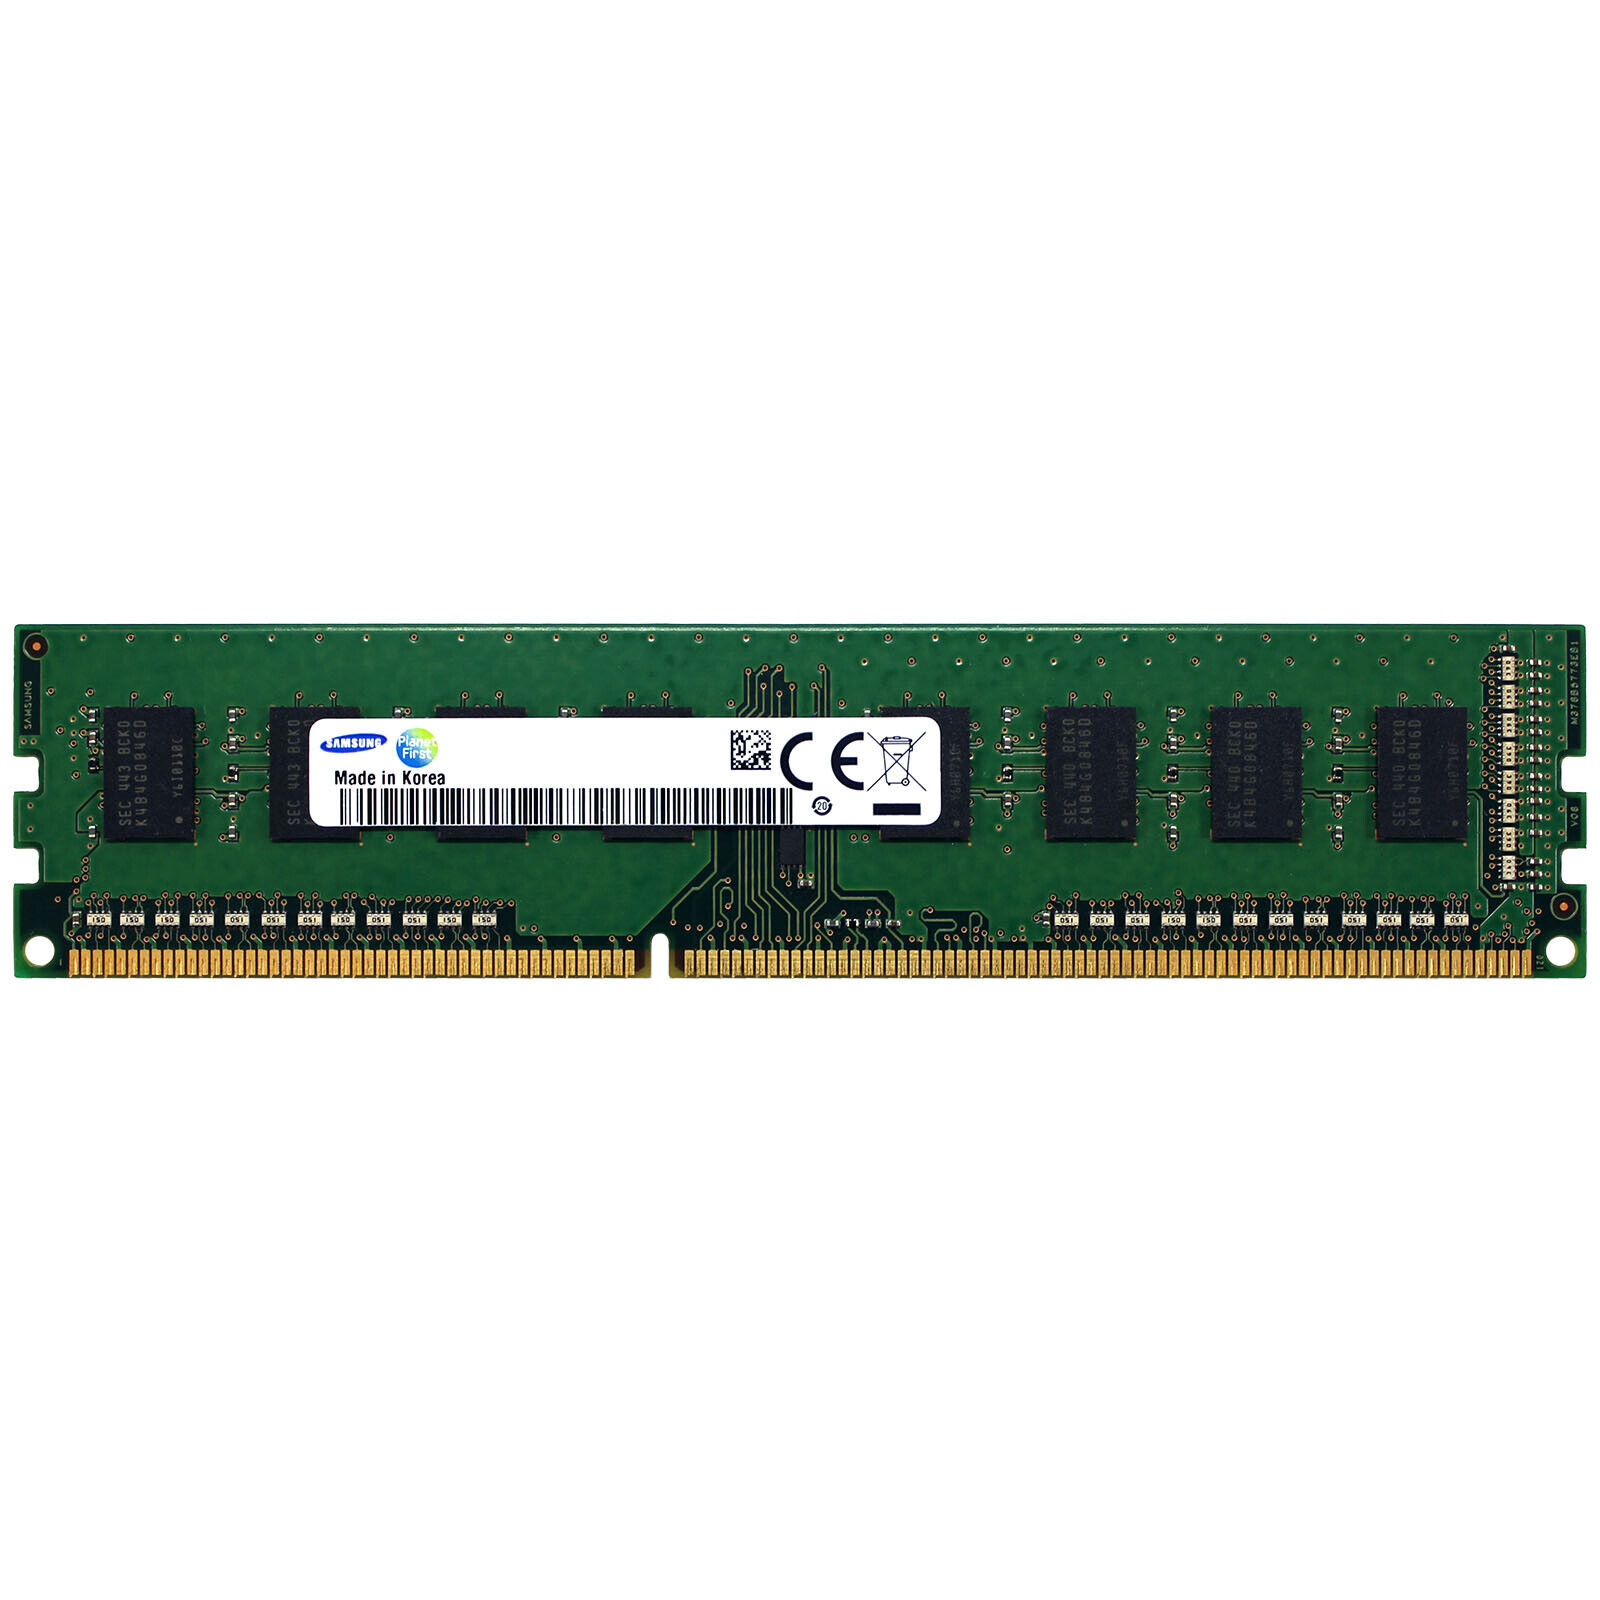 Samsung 4GB 1Rx8 PC3L-12800 DDR3 1600MHz 1.35V DIMM Desktop Memory RAM 1 x 4GB